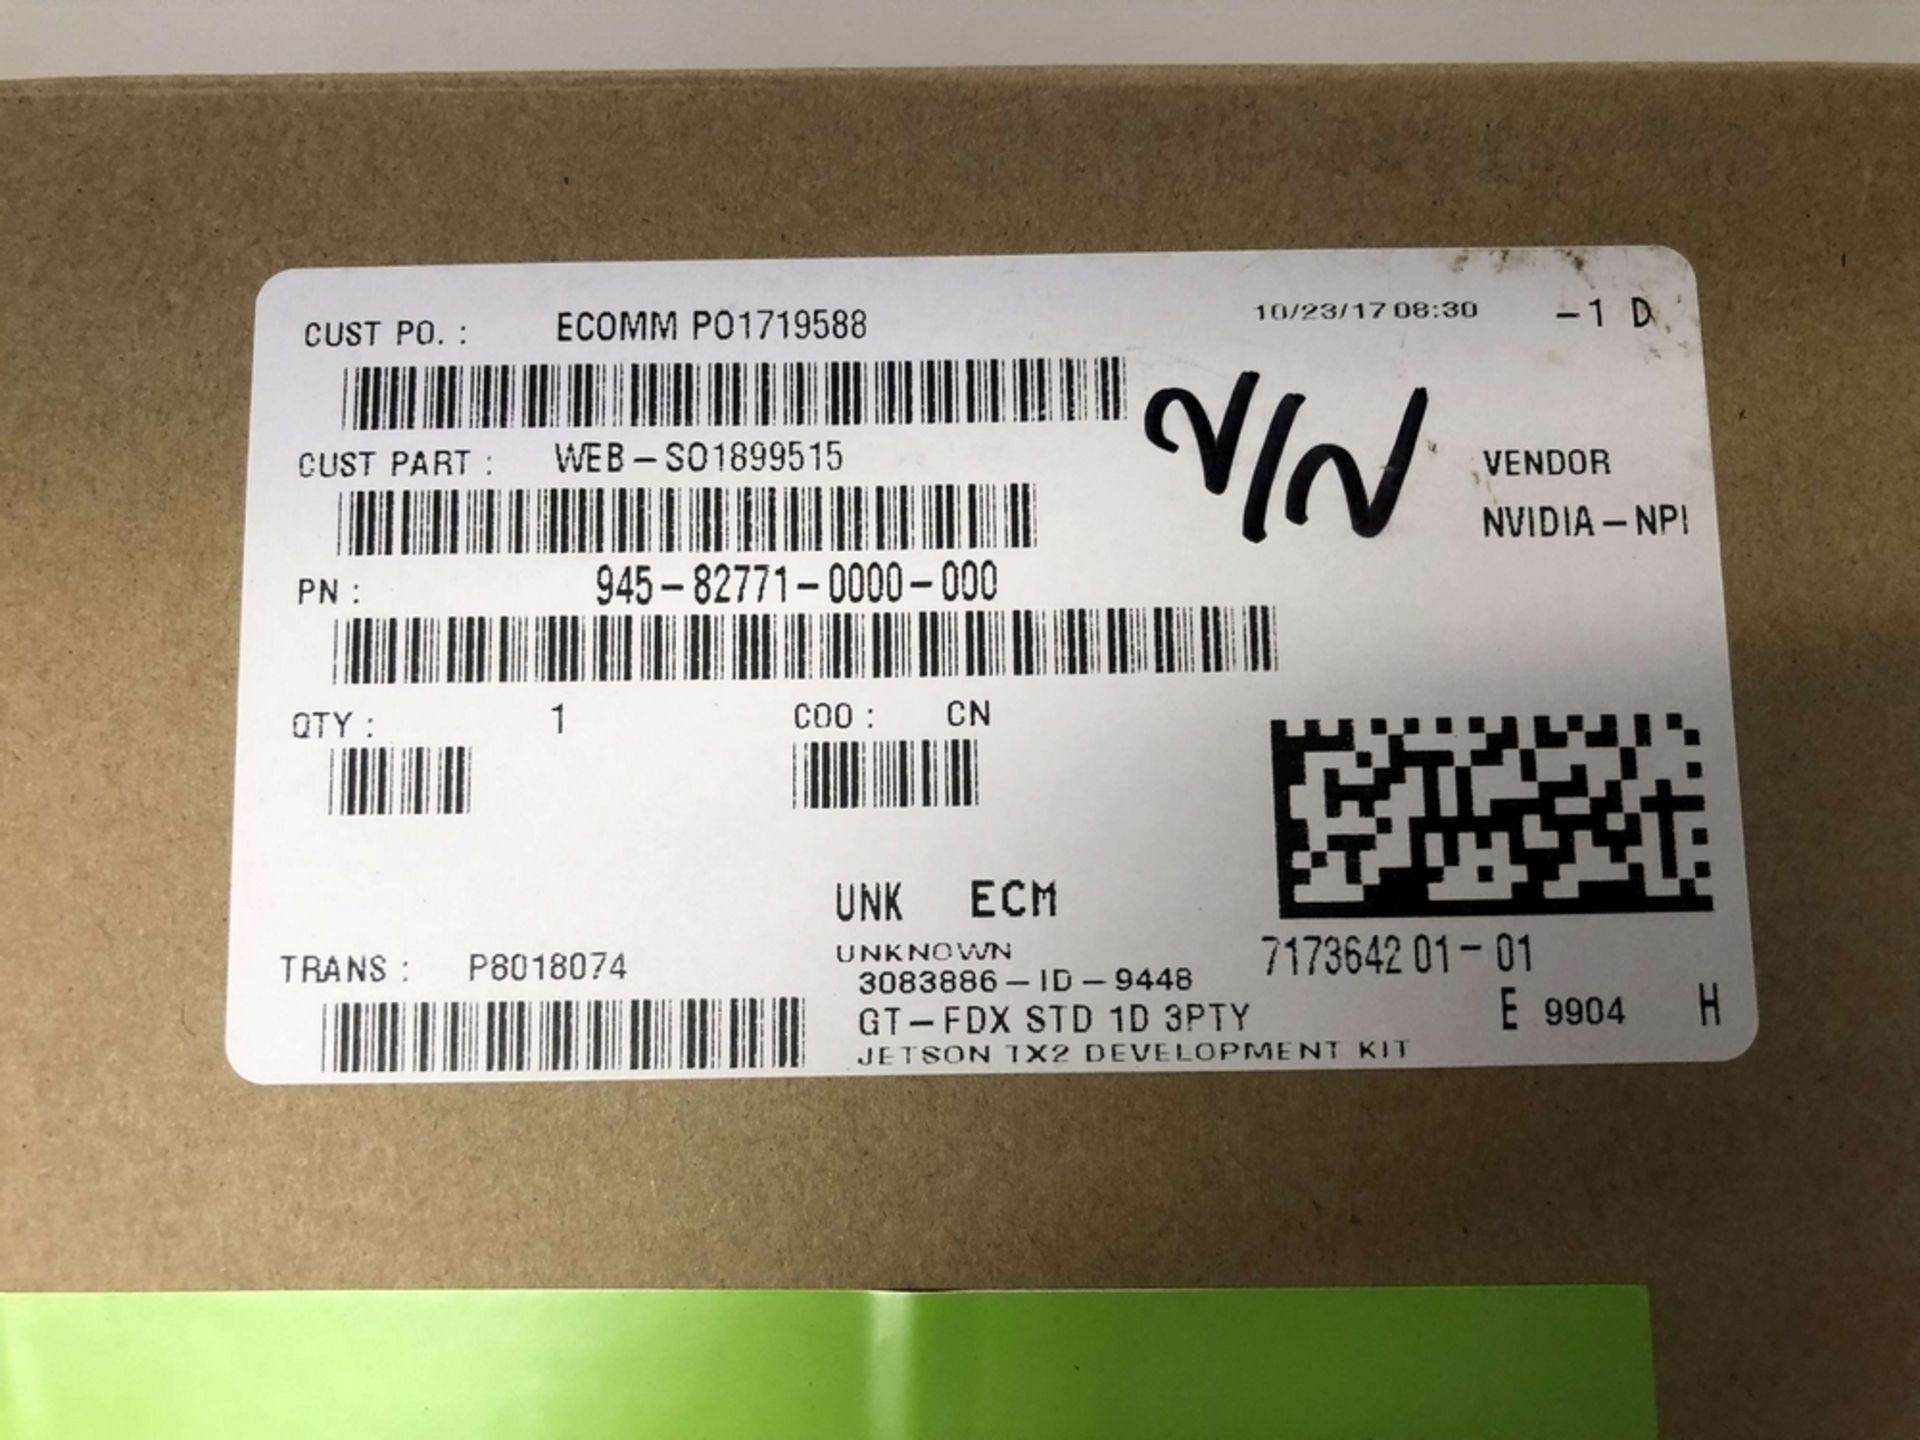 NVIDIA Jetson TX2 Developer Kits (New in Box - Unopened) - Image 3 of 3